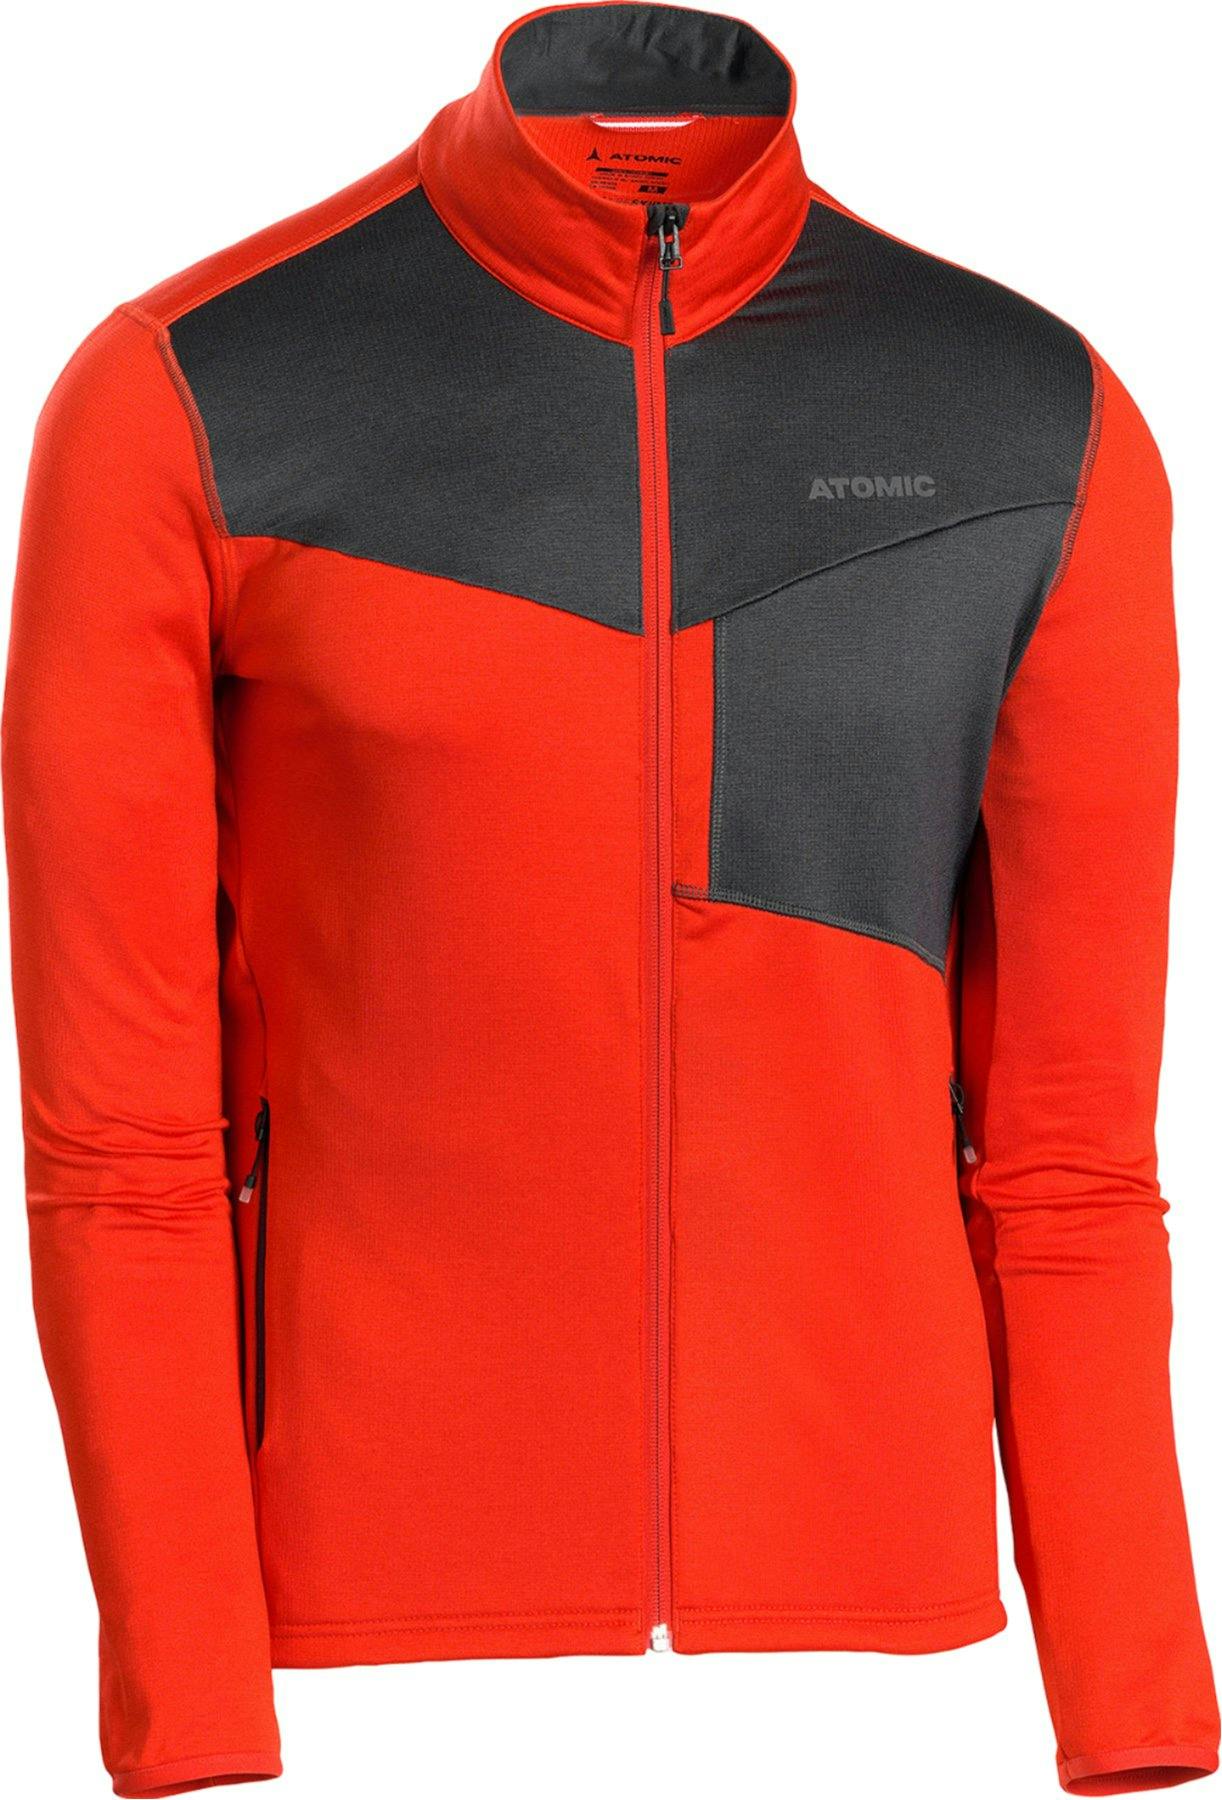 Product image for Redster Fleece Jacket - Men's